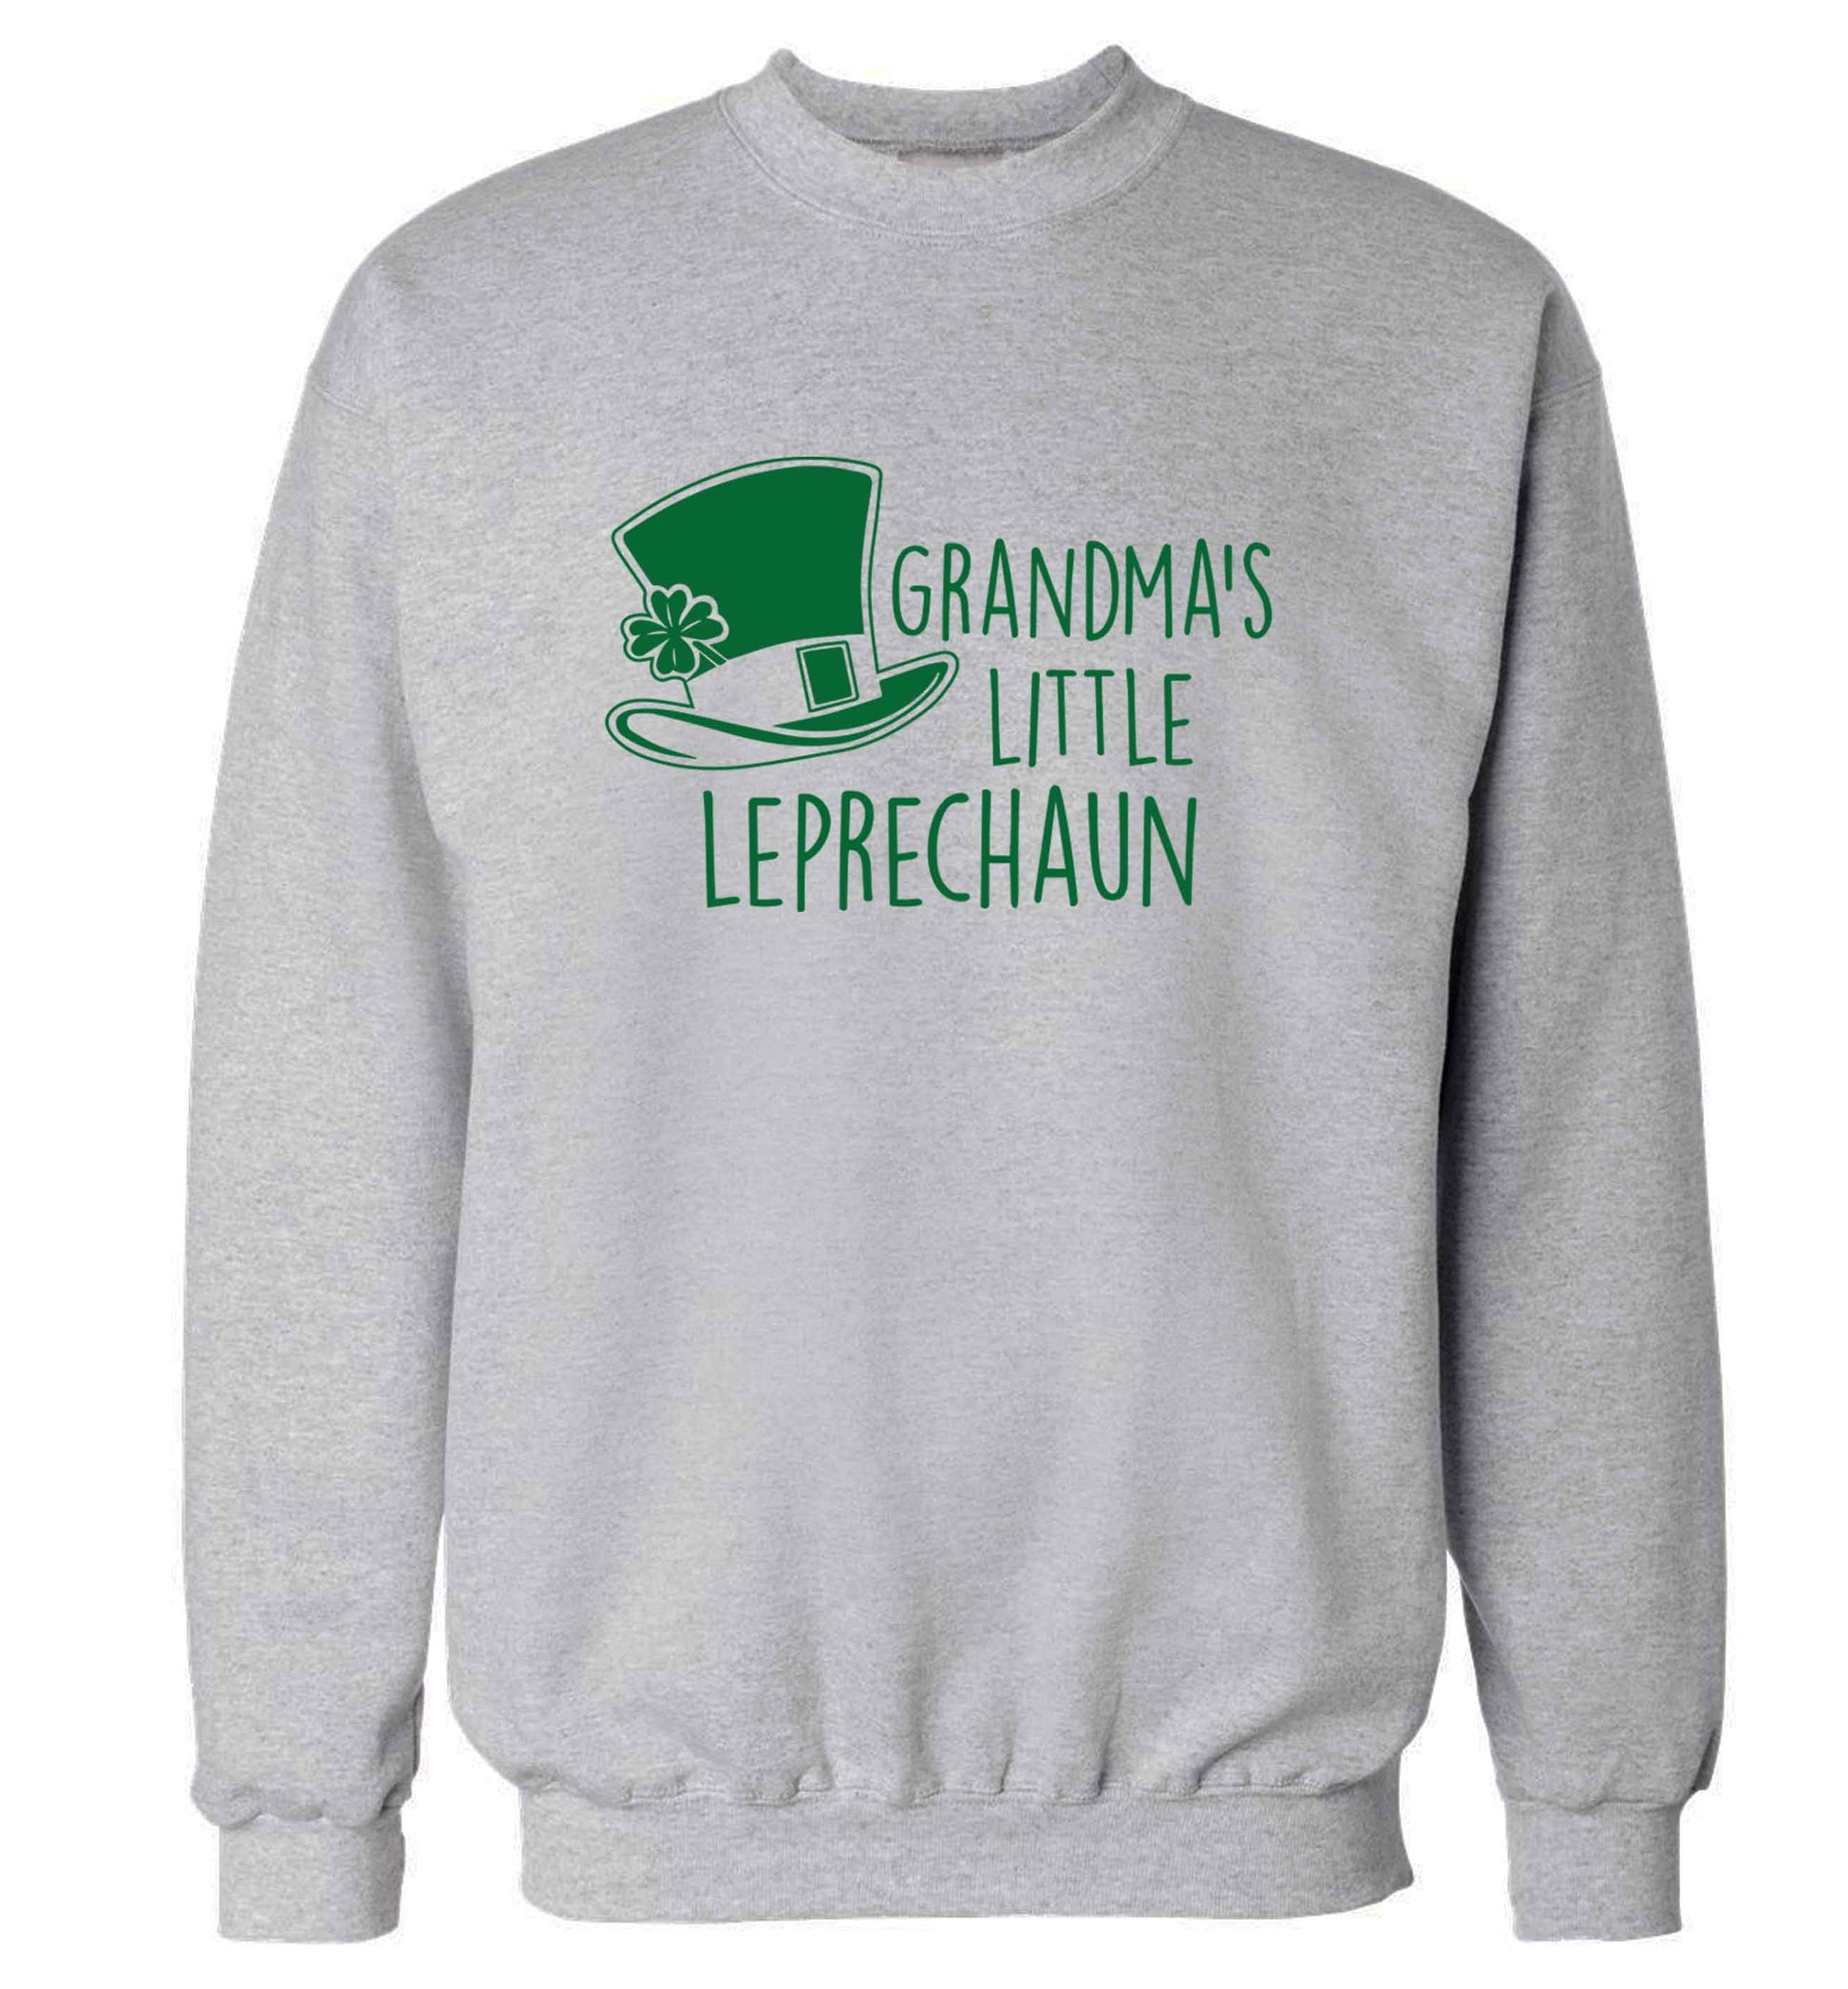 Grandma's little leprechaun adult's unisex grey sweater 2XL